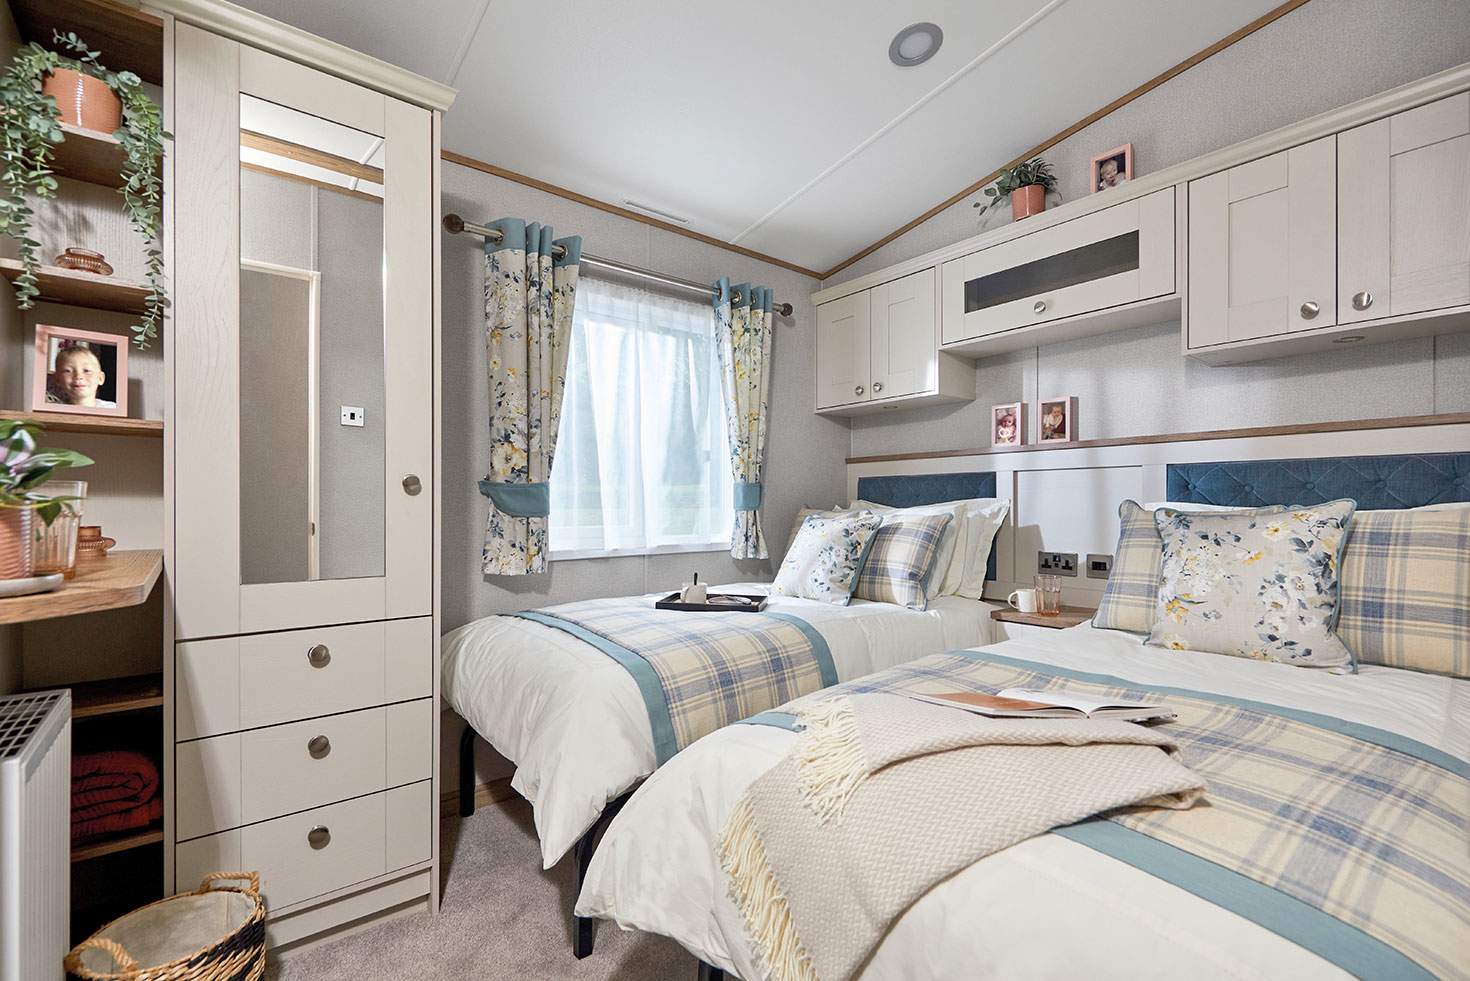 Platinum Holiday Caravan One, static caravan holiday lodge to hire Lake District